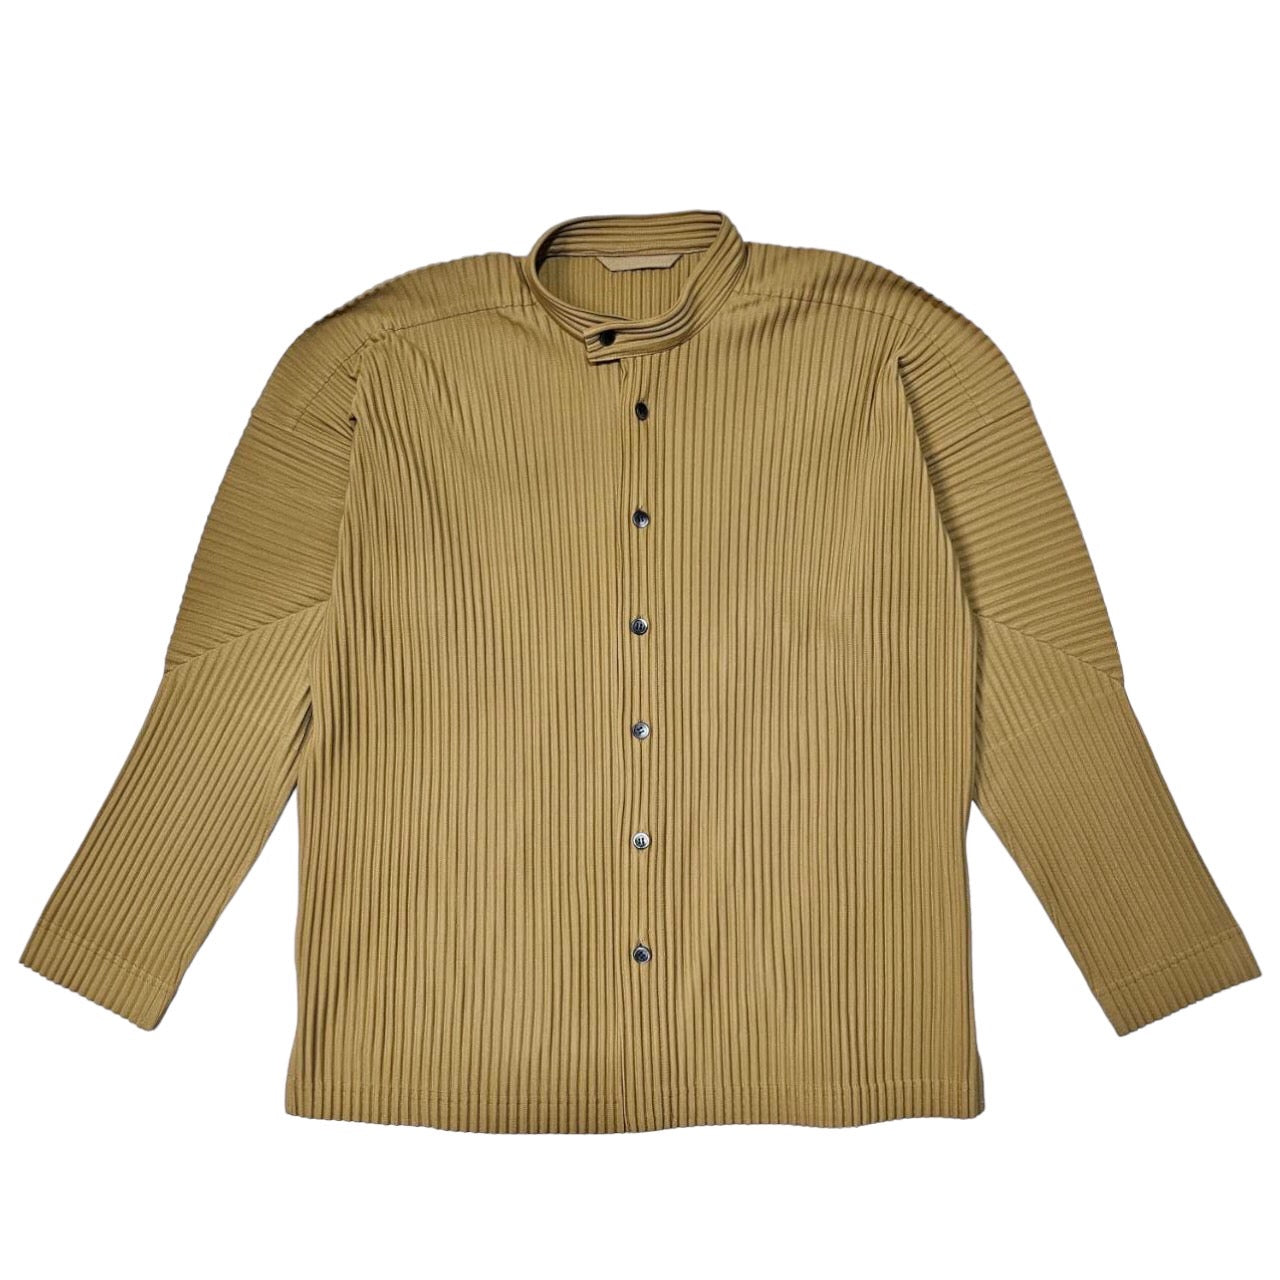 HOMME PLISSE ISSEY MIYAKE(オムプリッセイッセイミヤケ) mao color pleated shirt  jacket/マオカラープリーツシャツジャケット HP73JJ112 SIZE 3(L) ライトブラウン